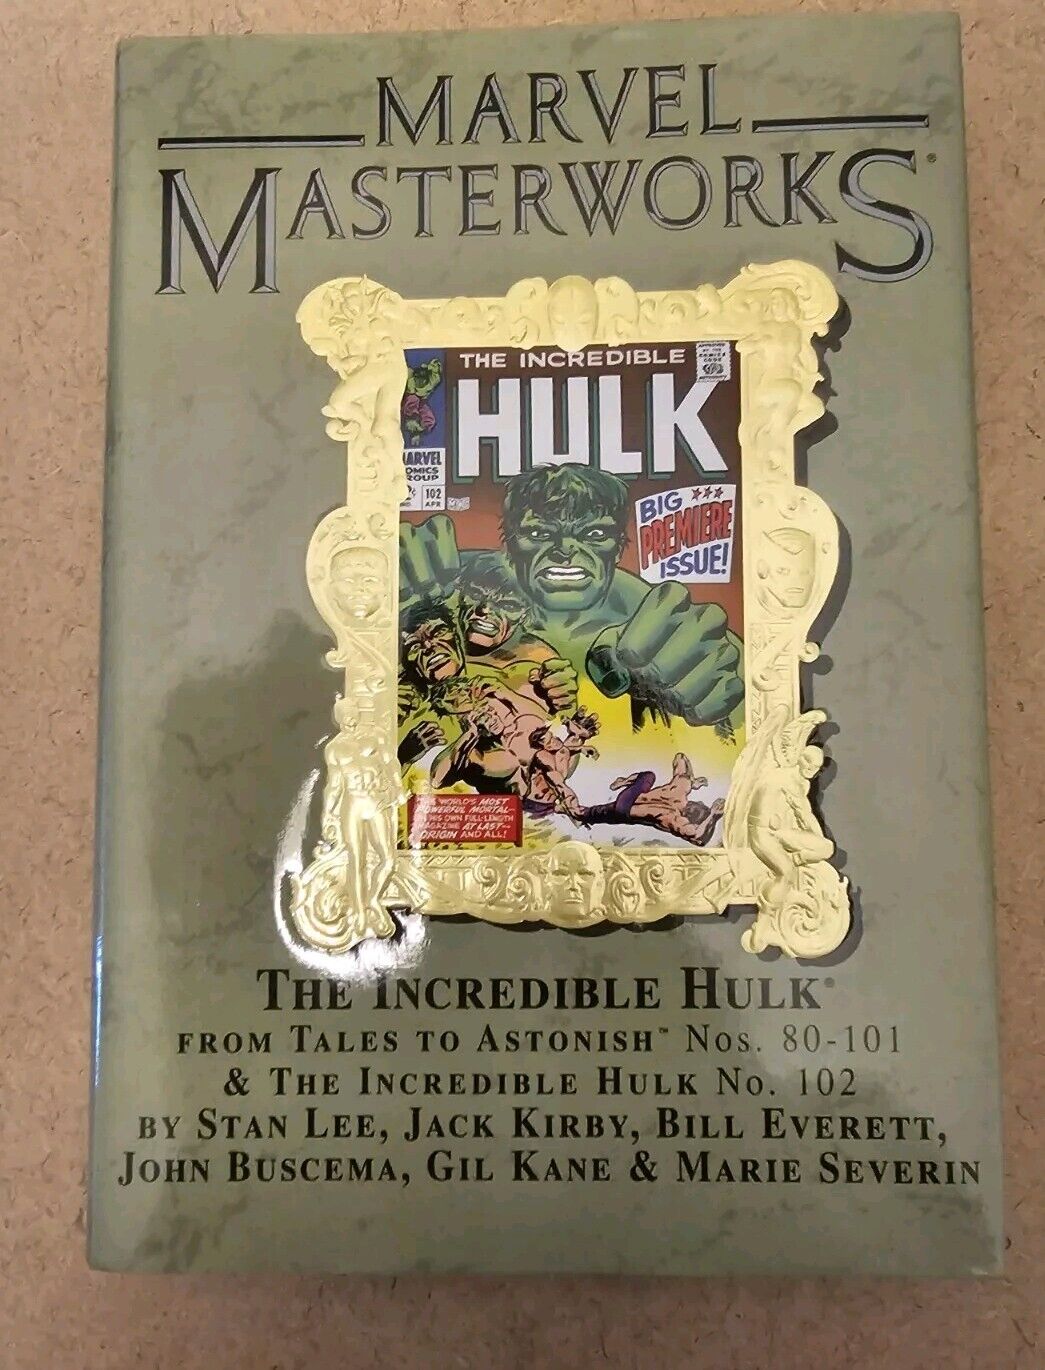 Marvel Masterworks: The Incredible Hulk #3 (Marvel Comics January 2006)